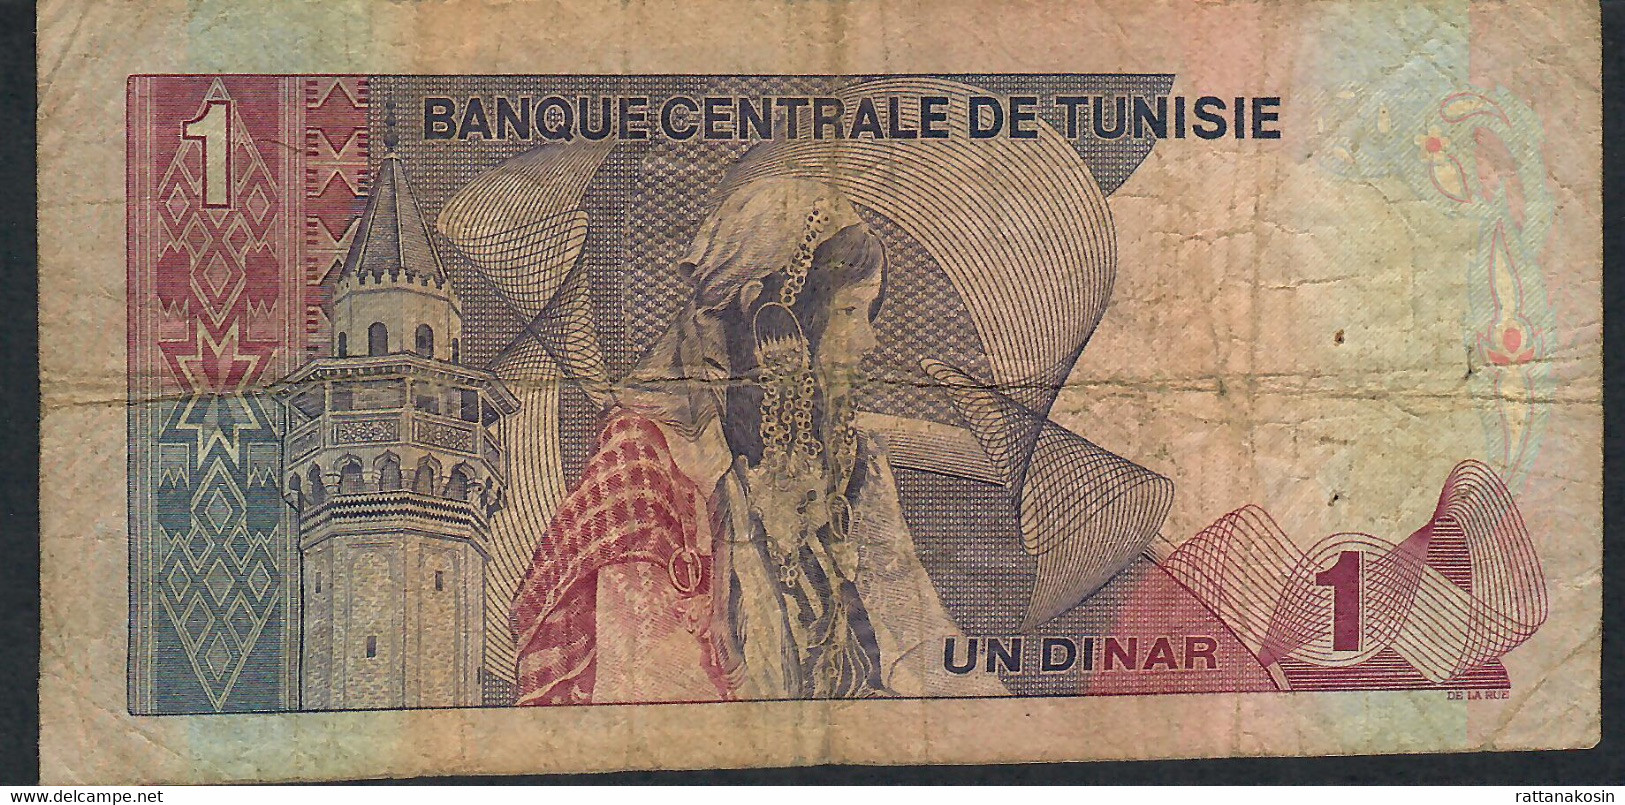 TUNISIA P67 1 DINAR 1972  #B/1  FINE - Tunesien